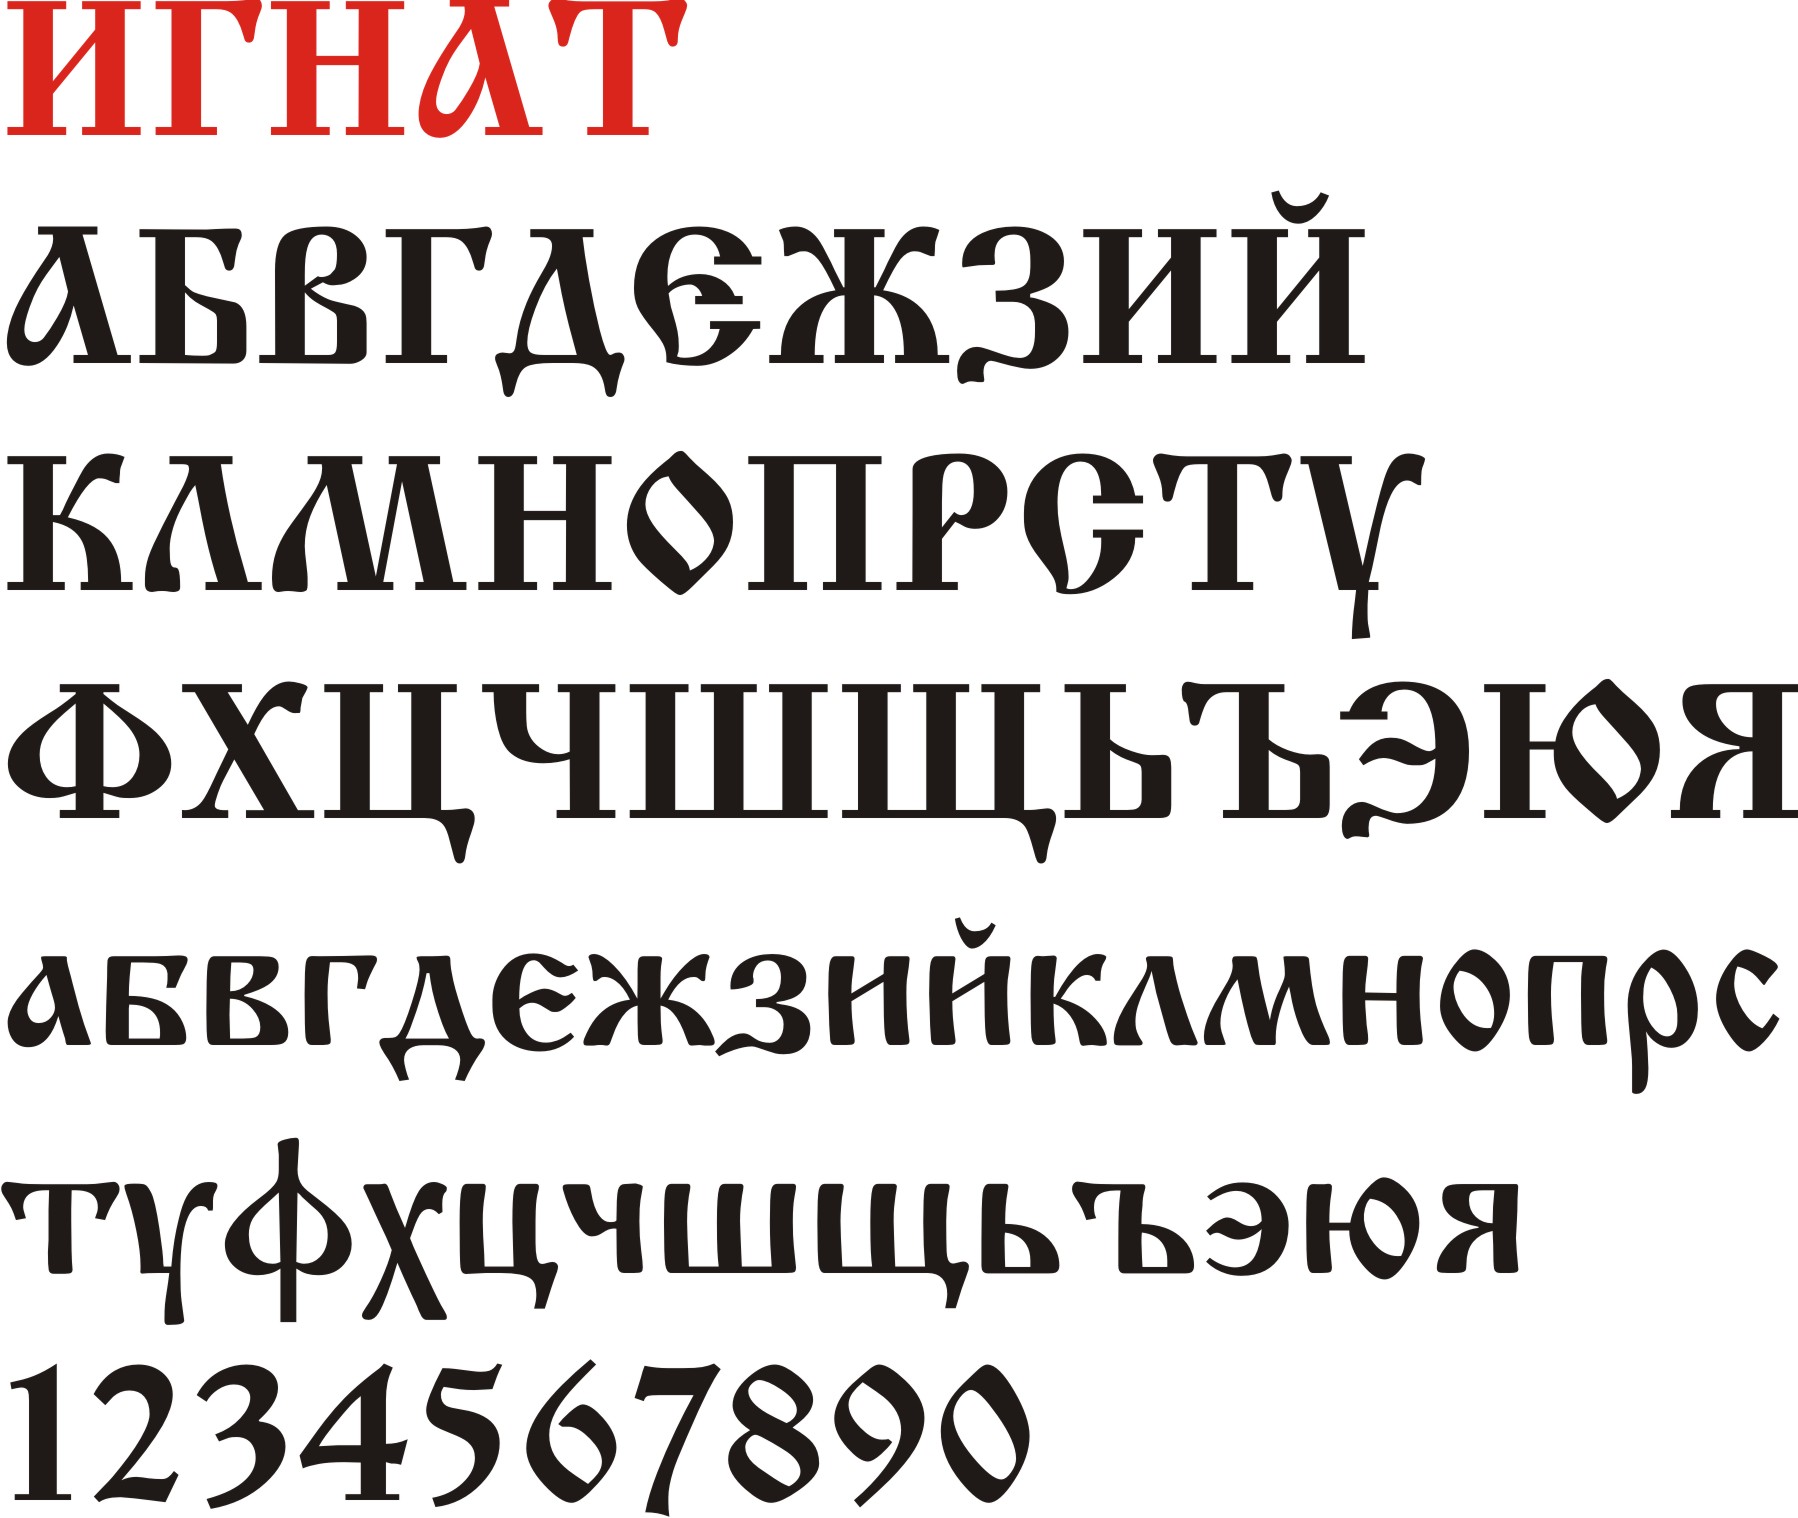 Шрифты на русском телеграмм фото 20